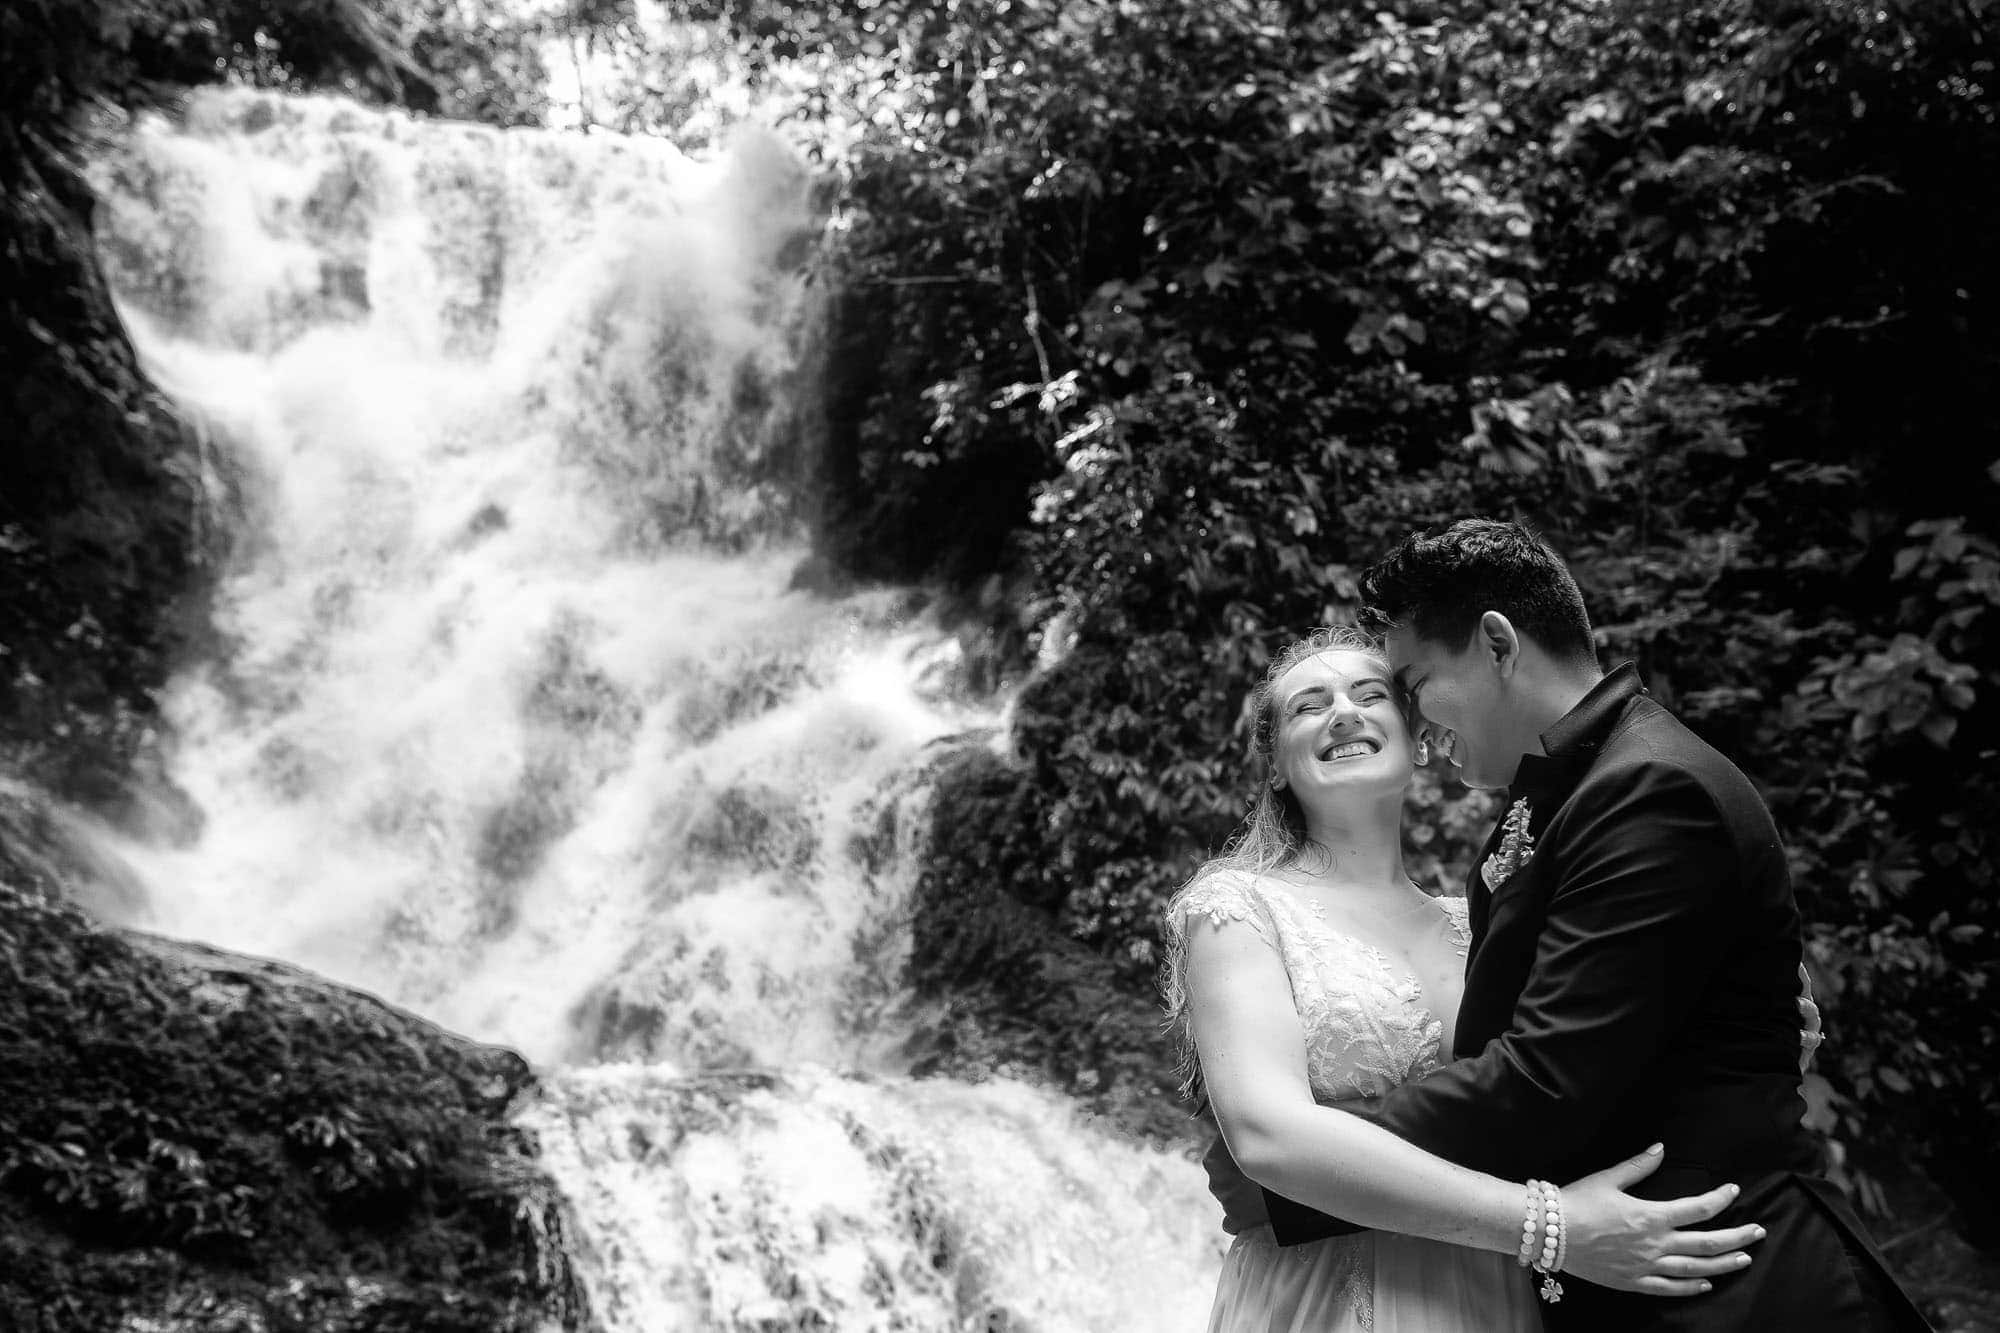 Unusual wedding ideas: Photoshoot at a waterfall